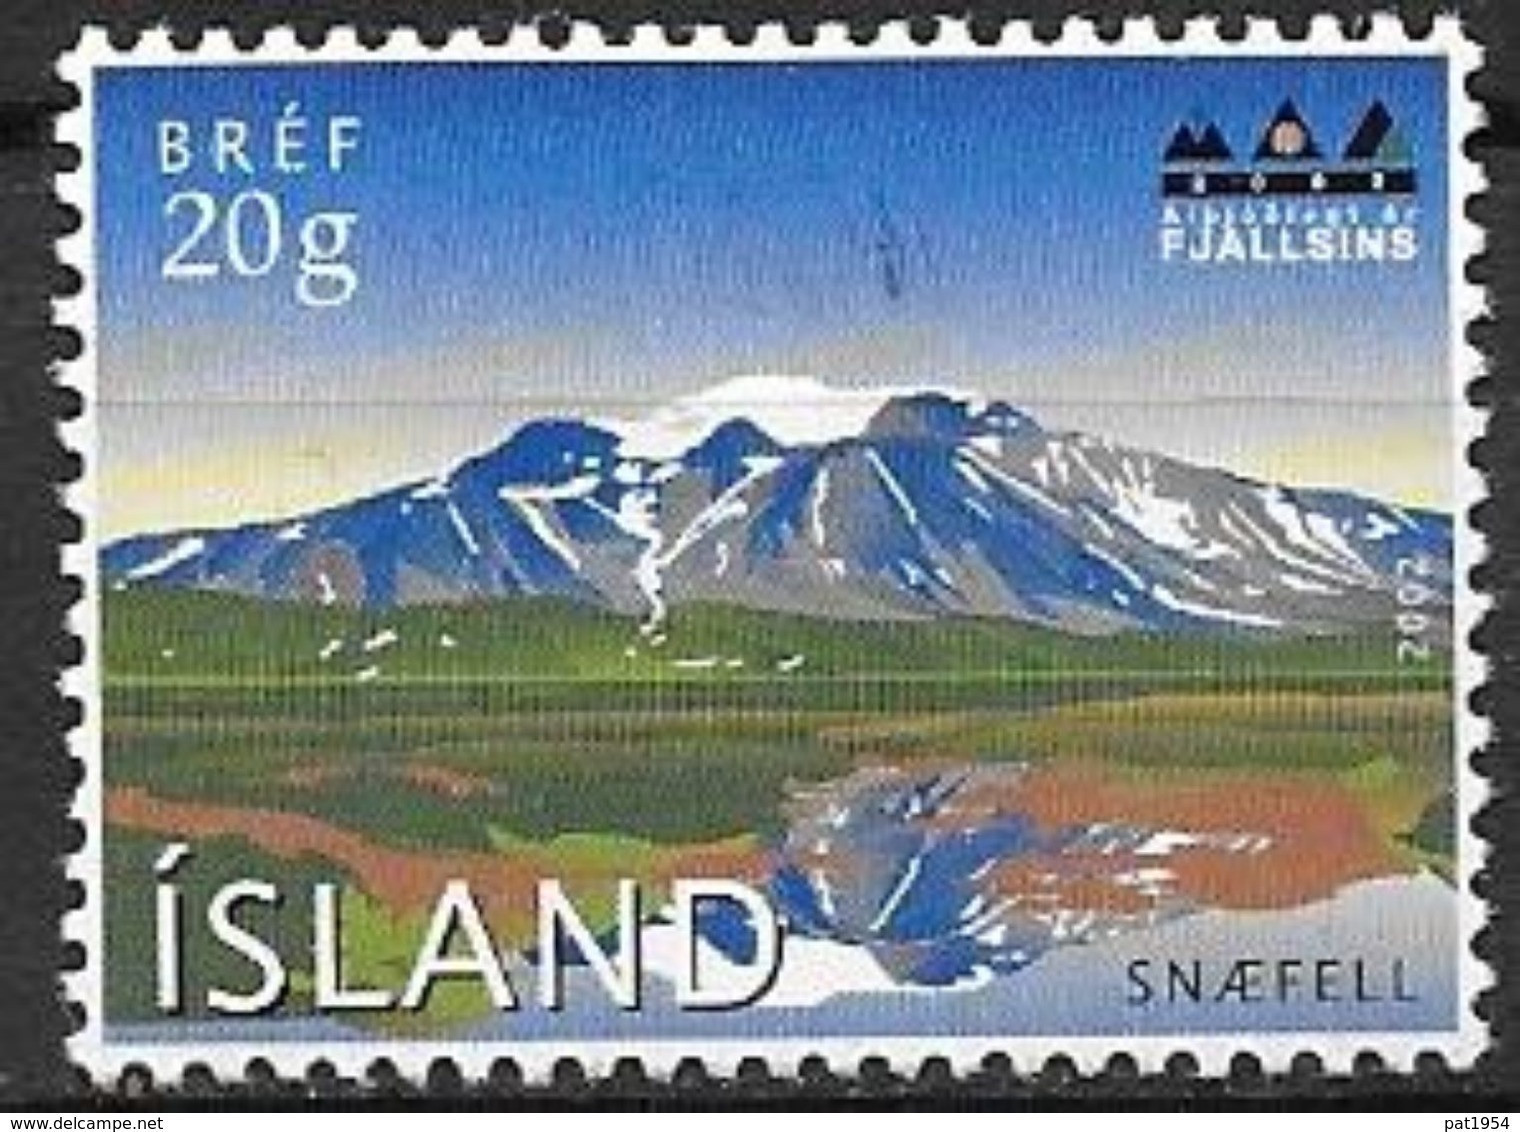 Islande 2002 N°932 Neuf** Année De La Montagne Snaefel - Ungebraucht